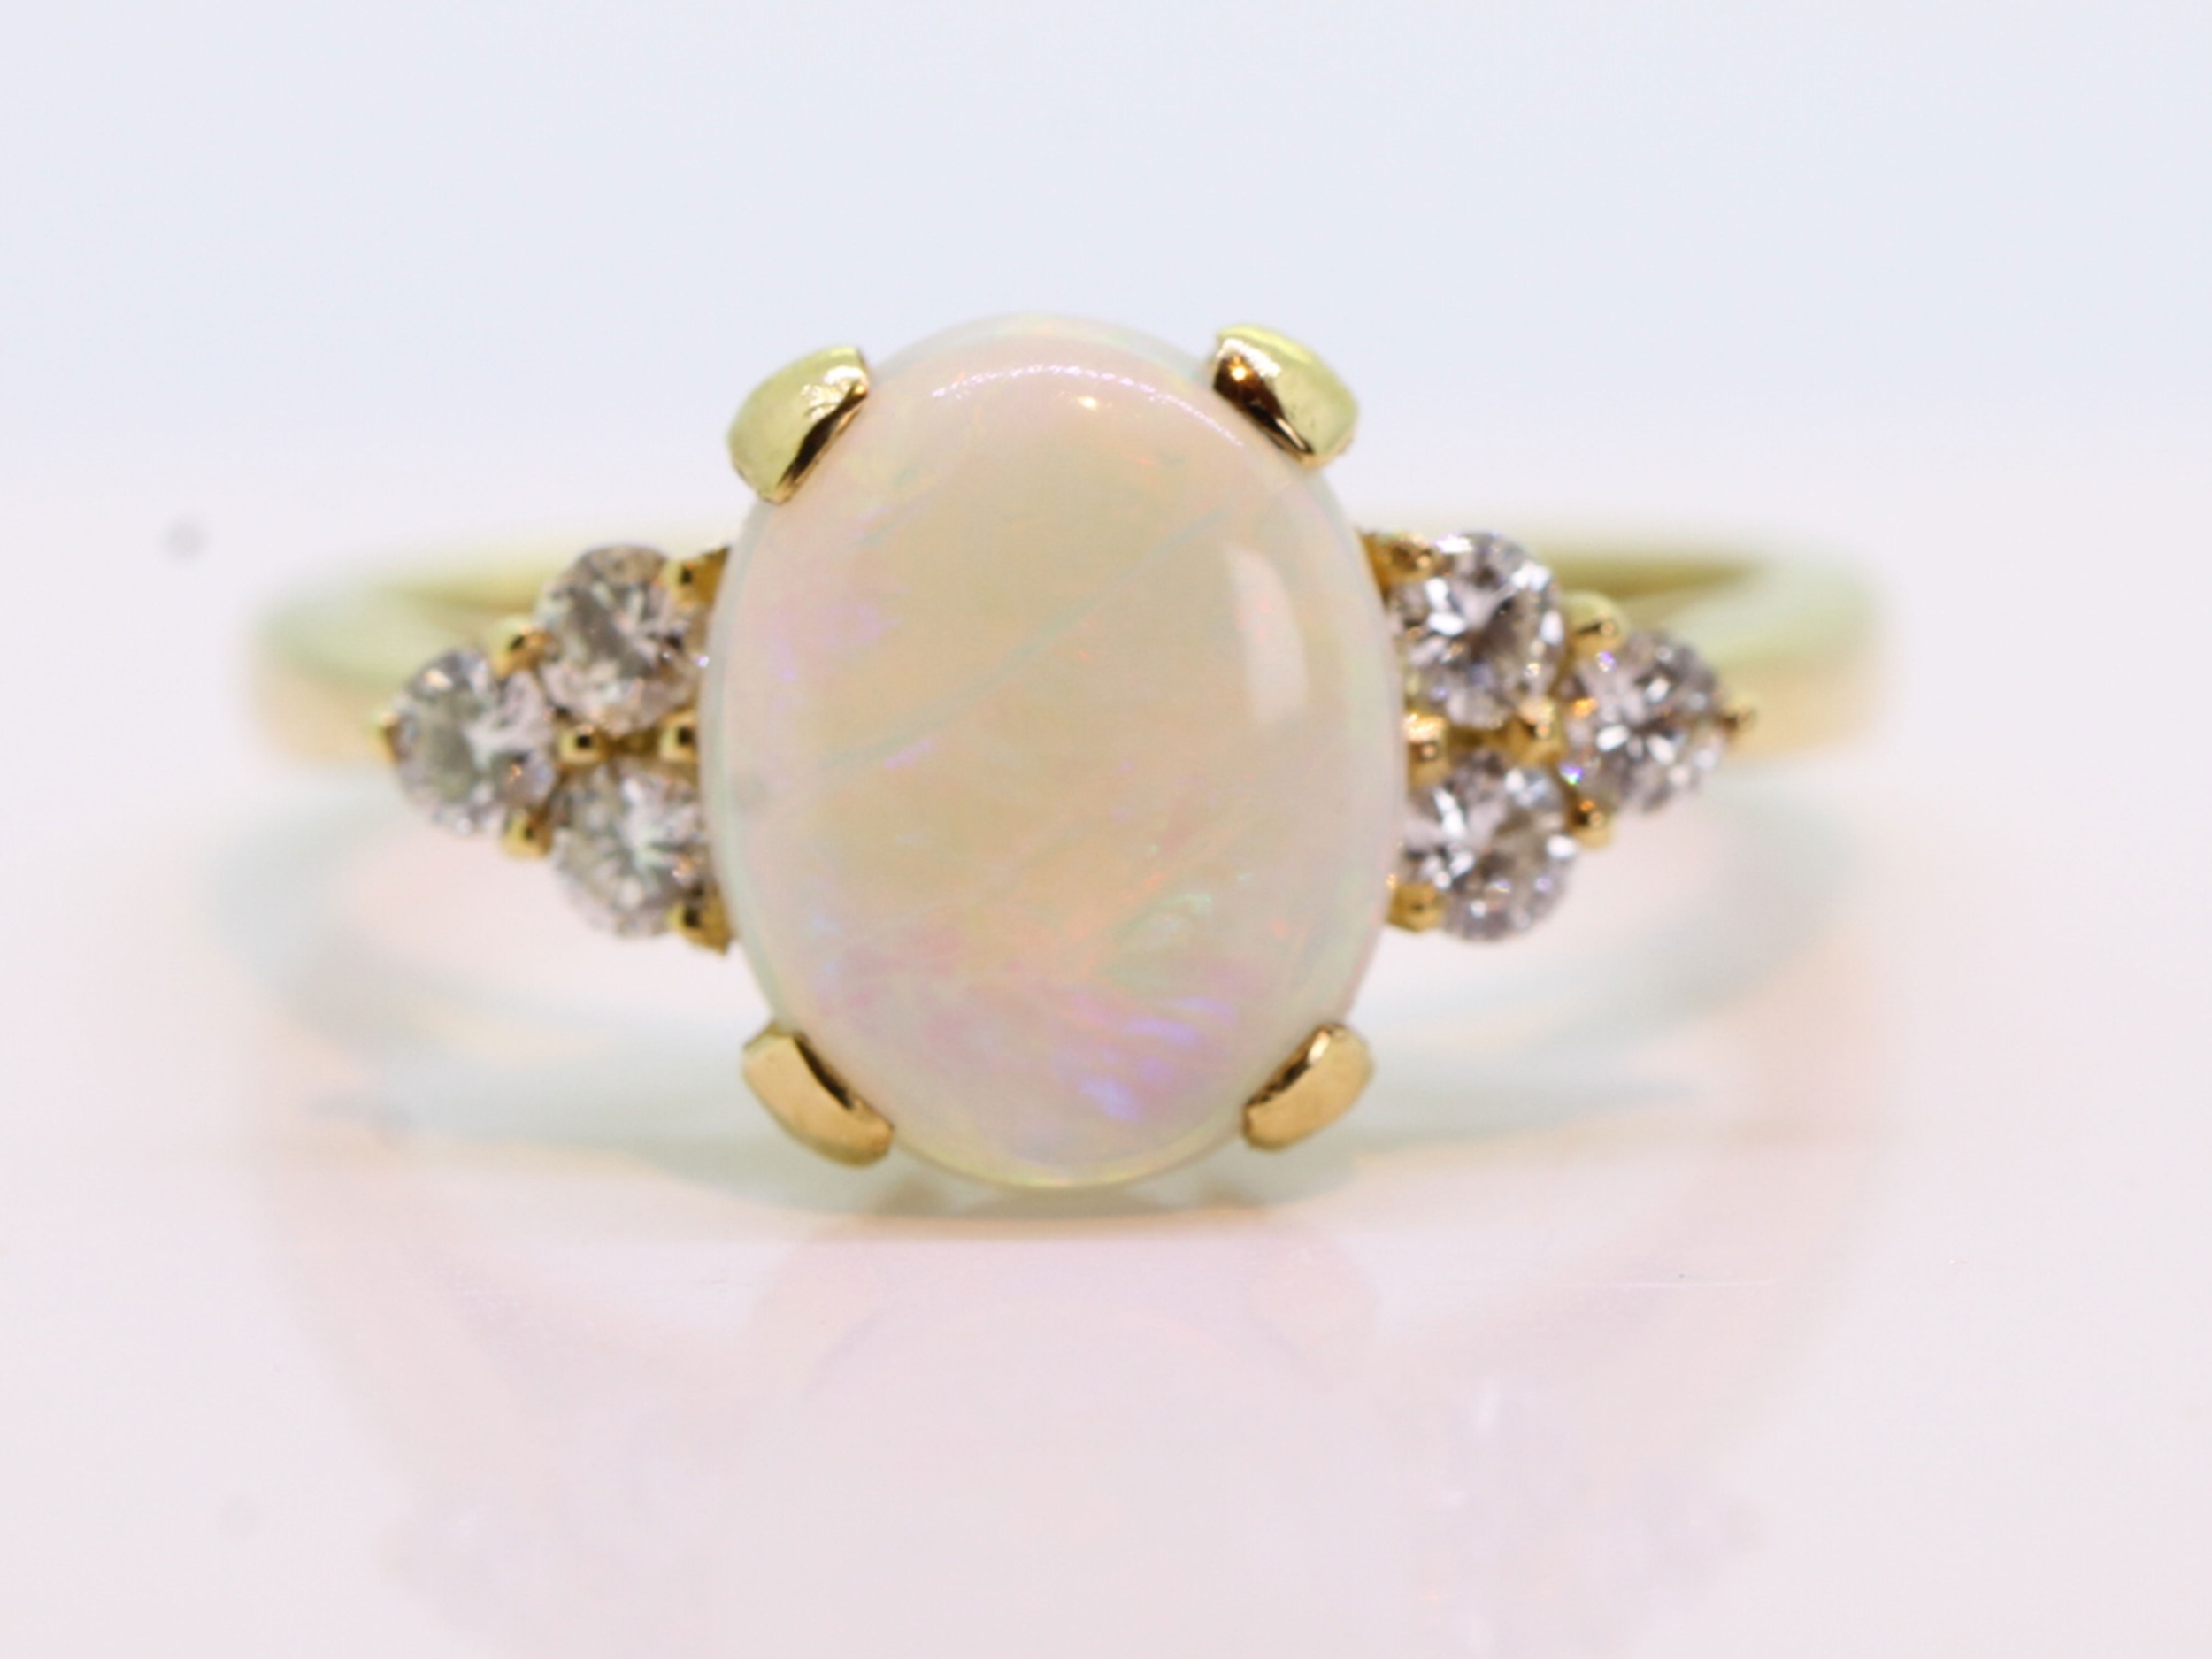 Impressive opal and diamond 18ct ring